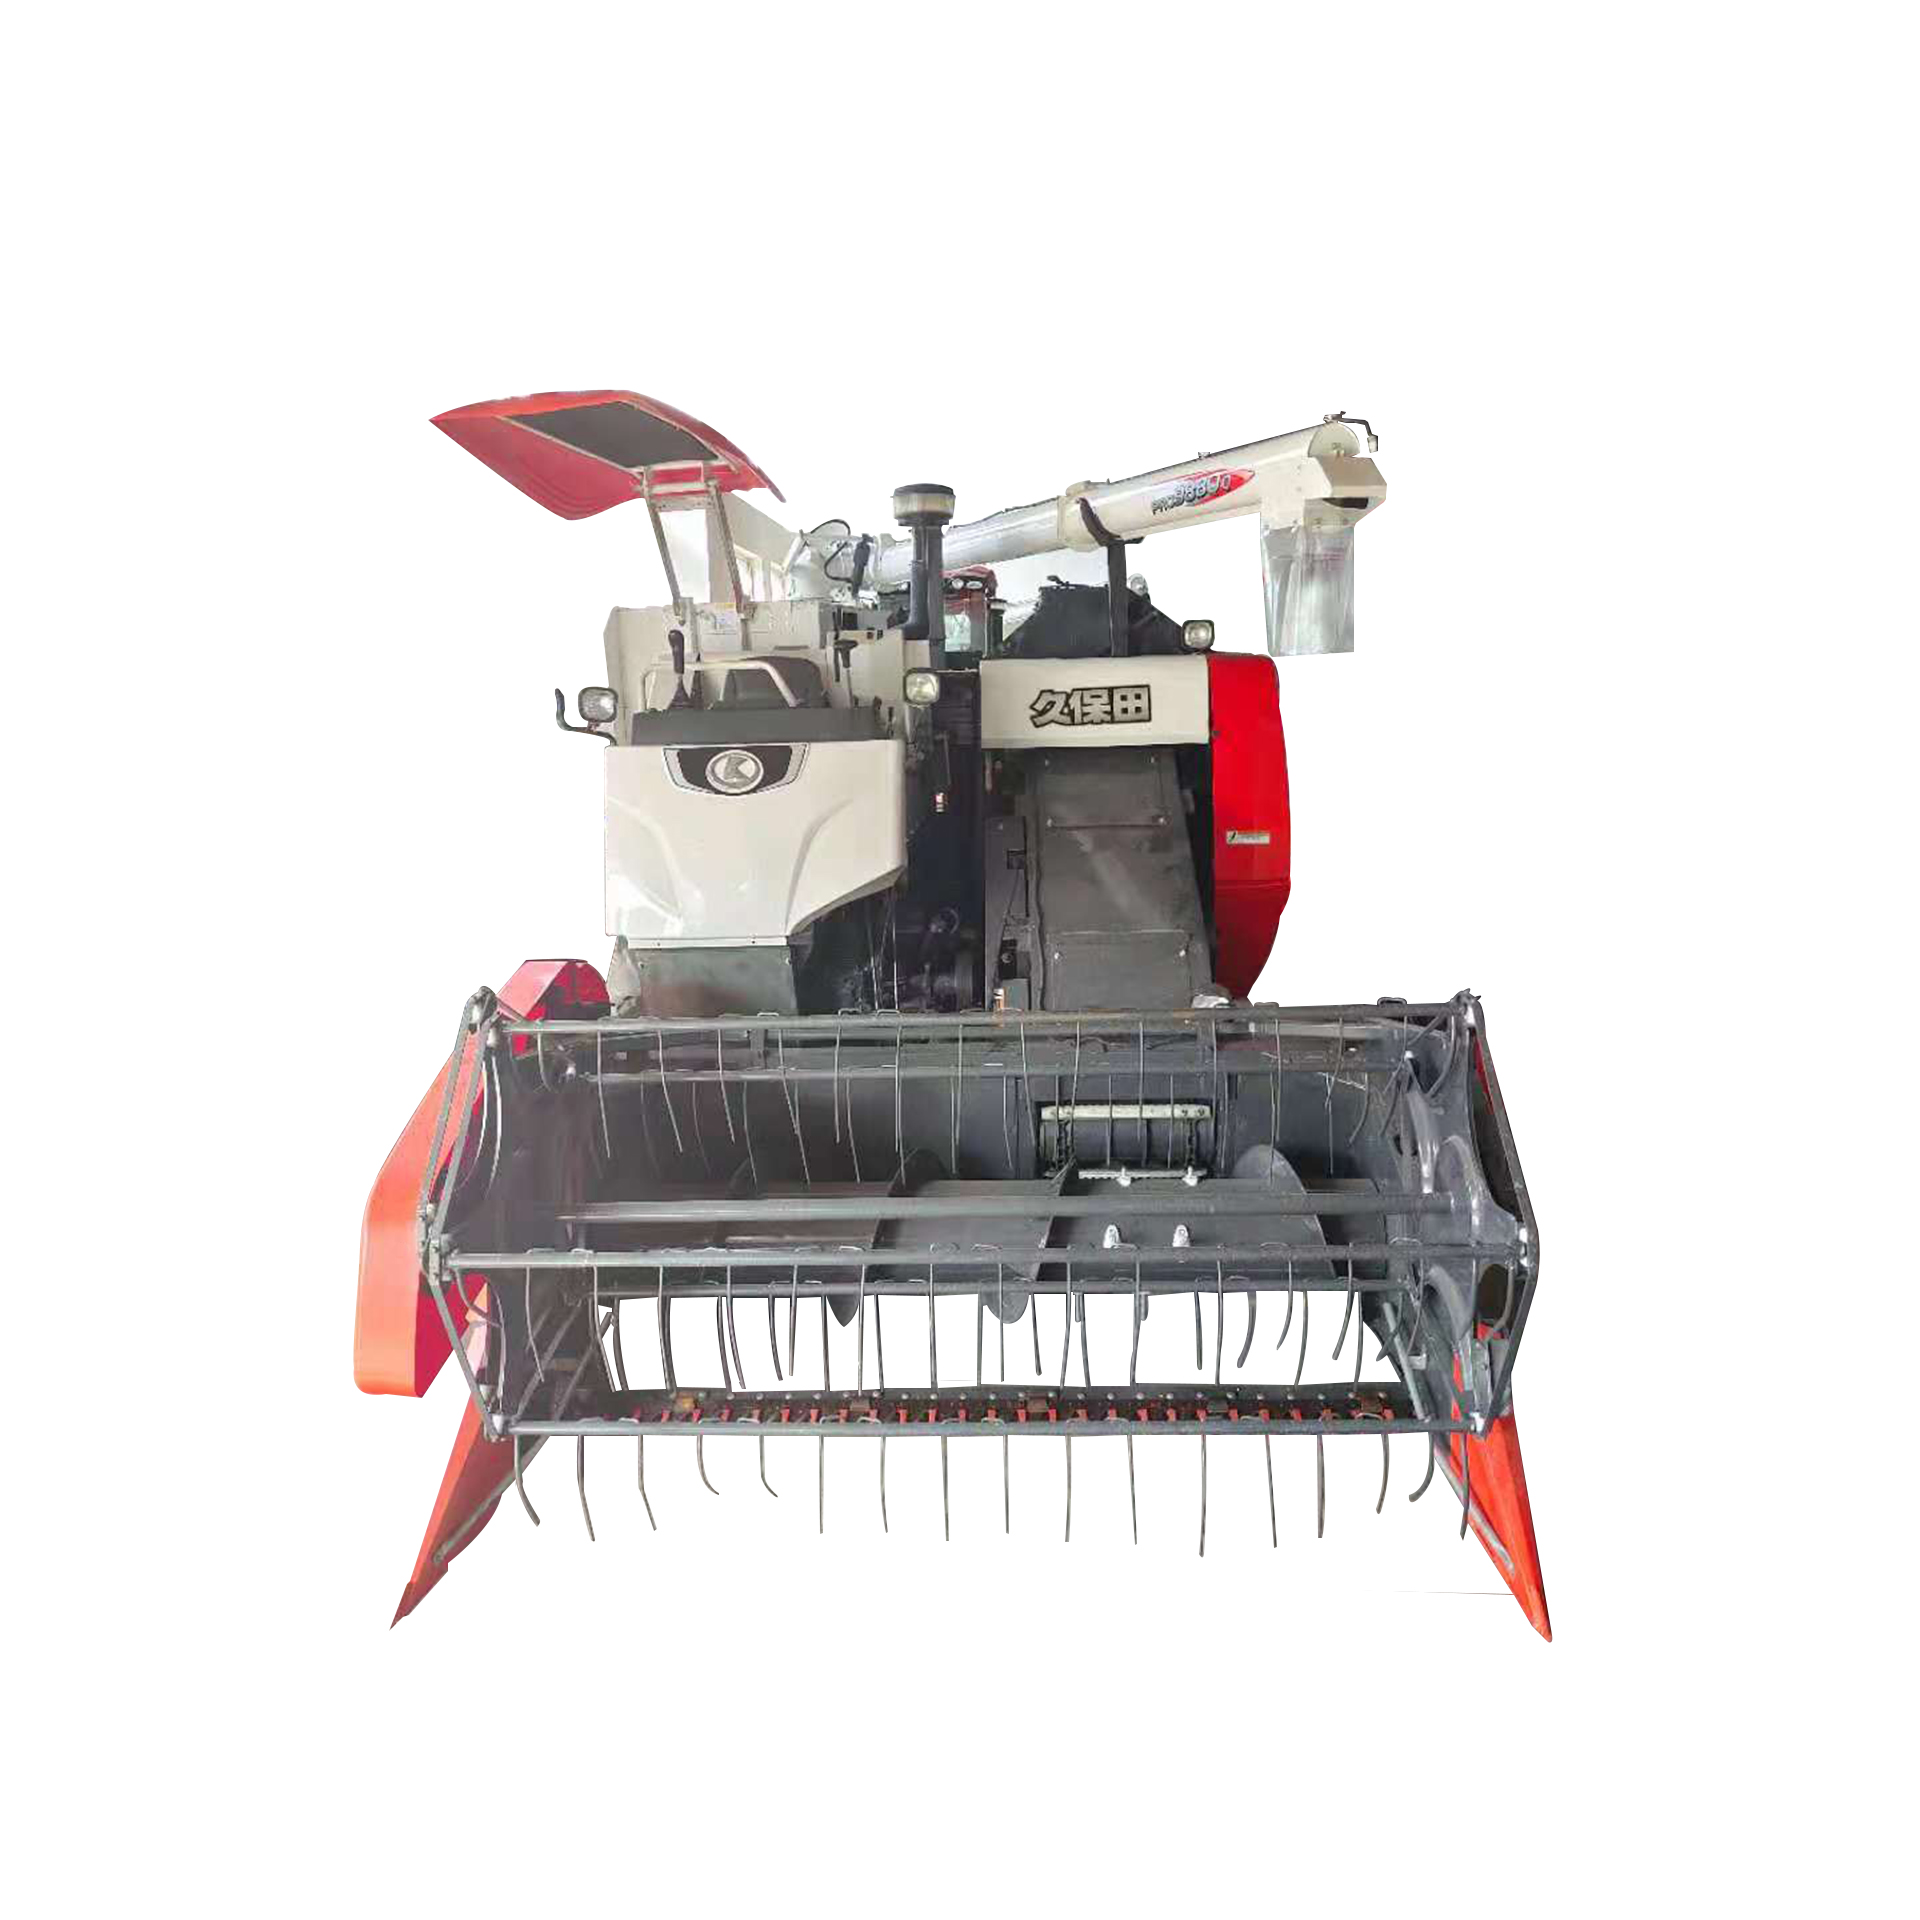 4LZ-4J(PRO988Q) kubota combine harvester agriculture machine with 1400L granary